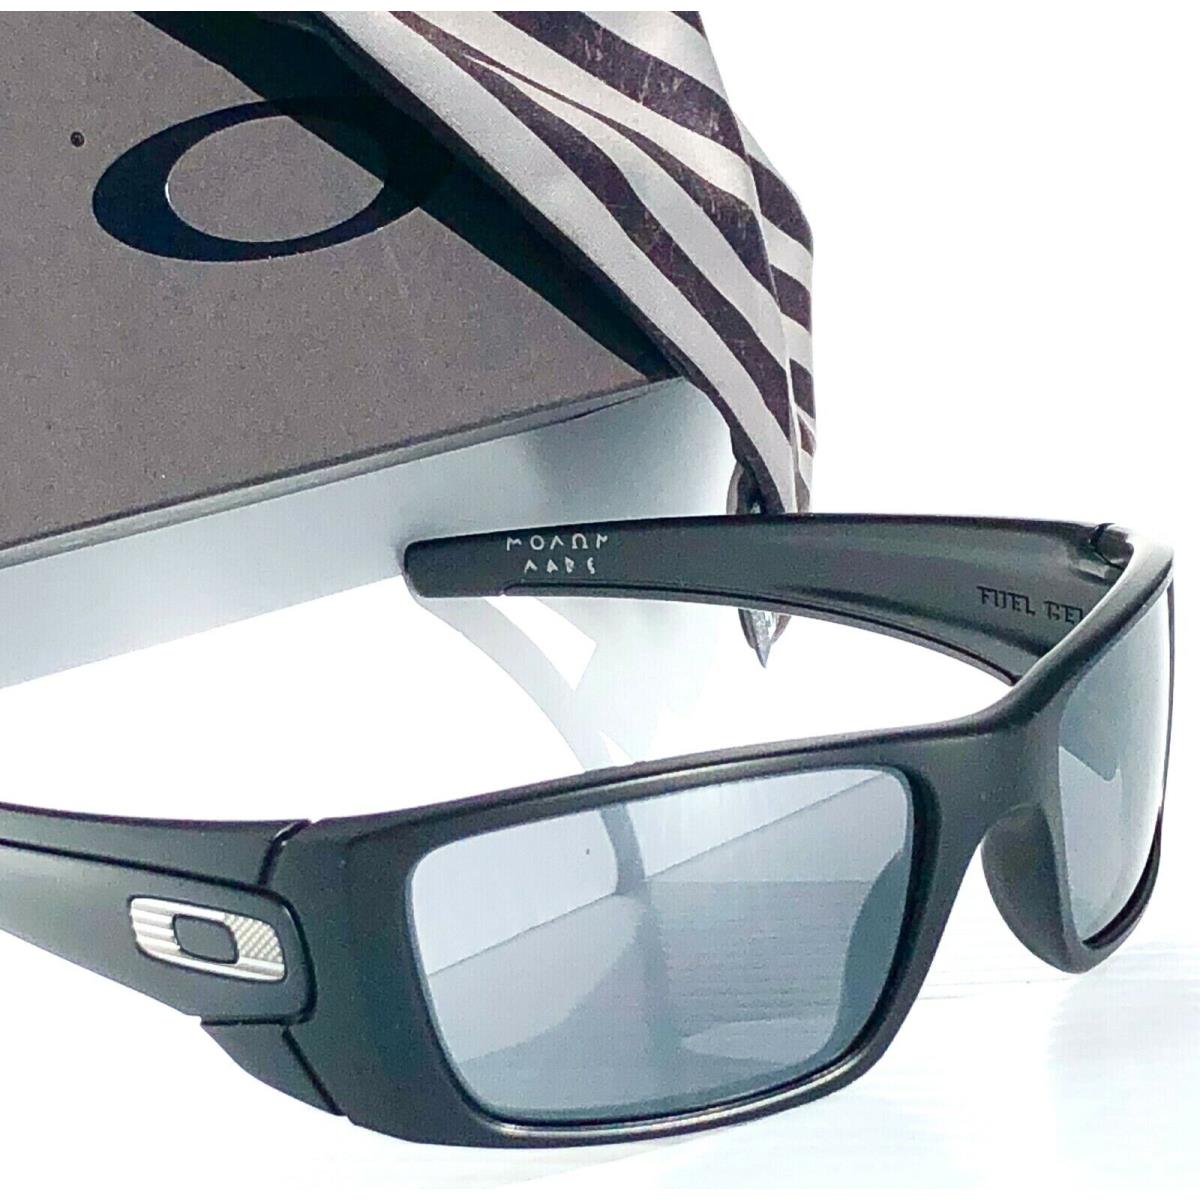 Oakley sunglasses Fuel Cell - Black Frame, Silver Lens 9